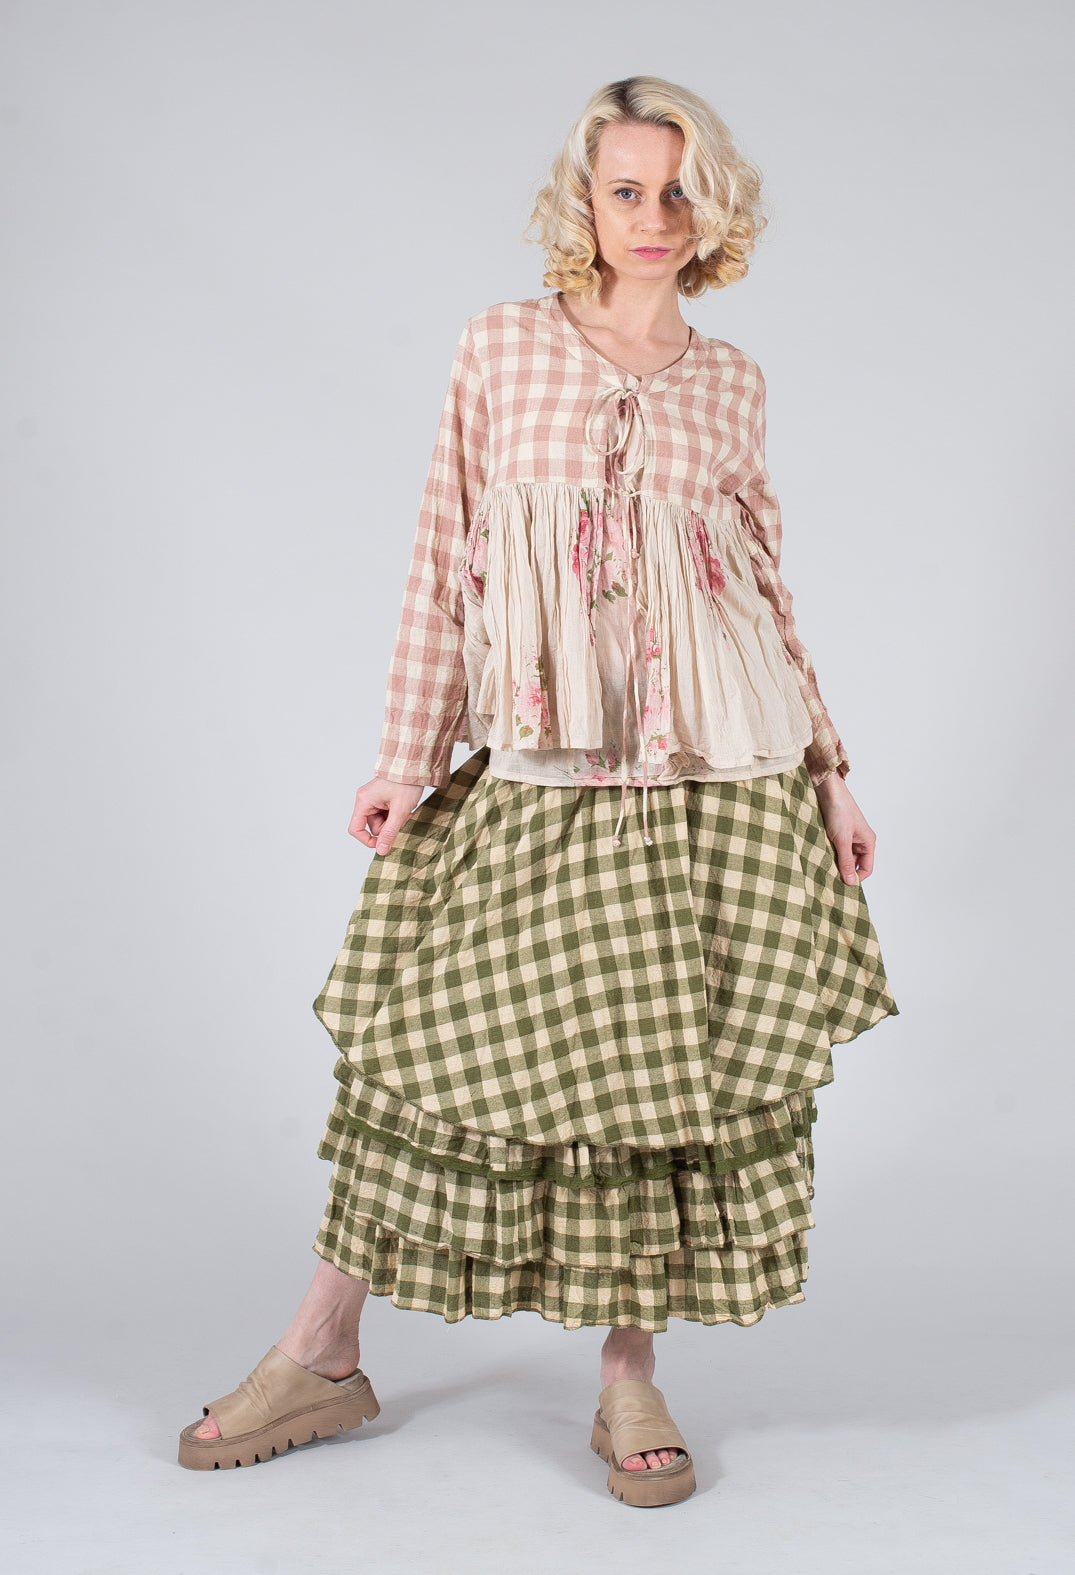 Madeleine Rustic Skirt in Carreaux Vert